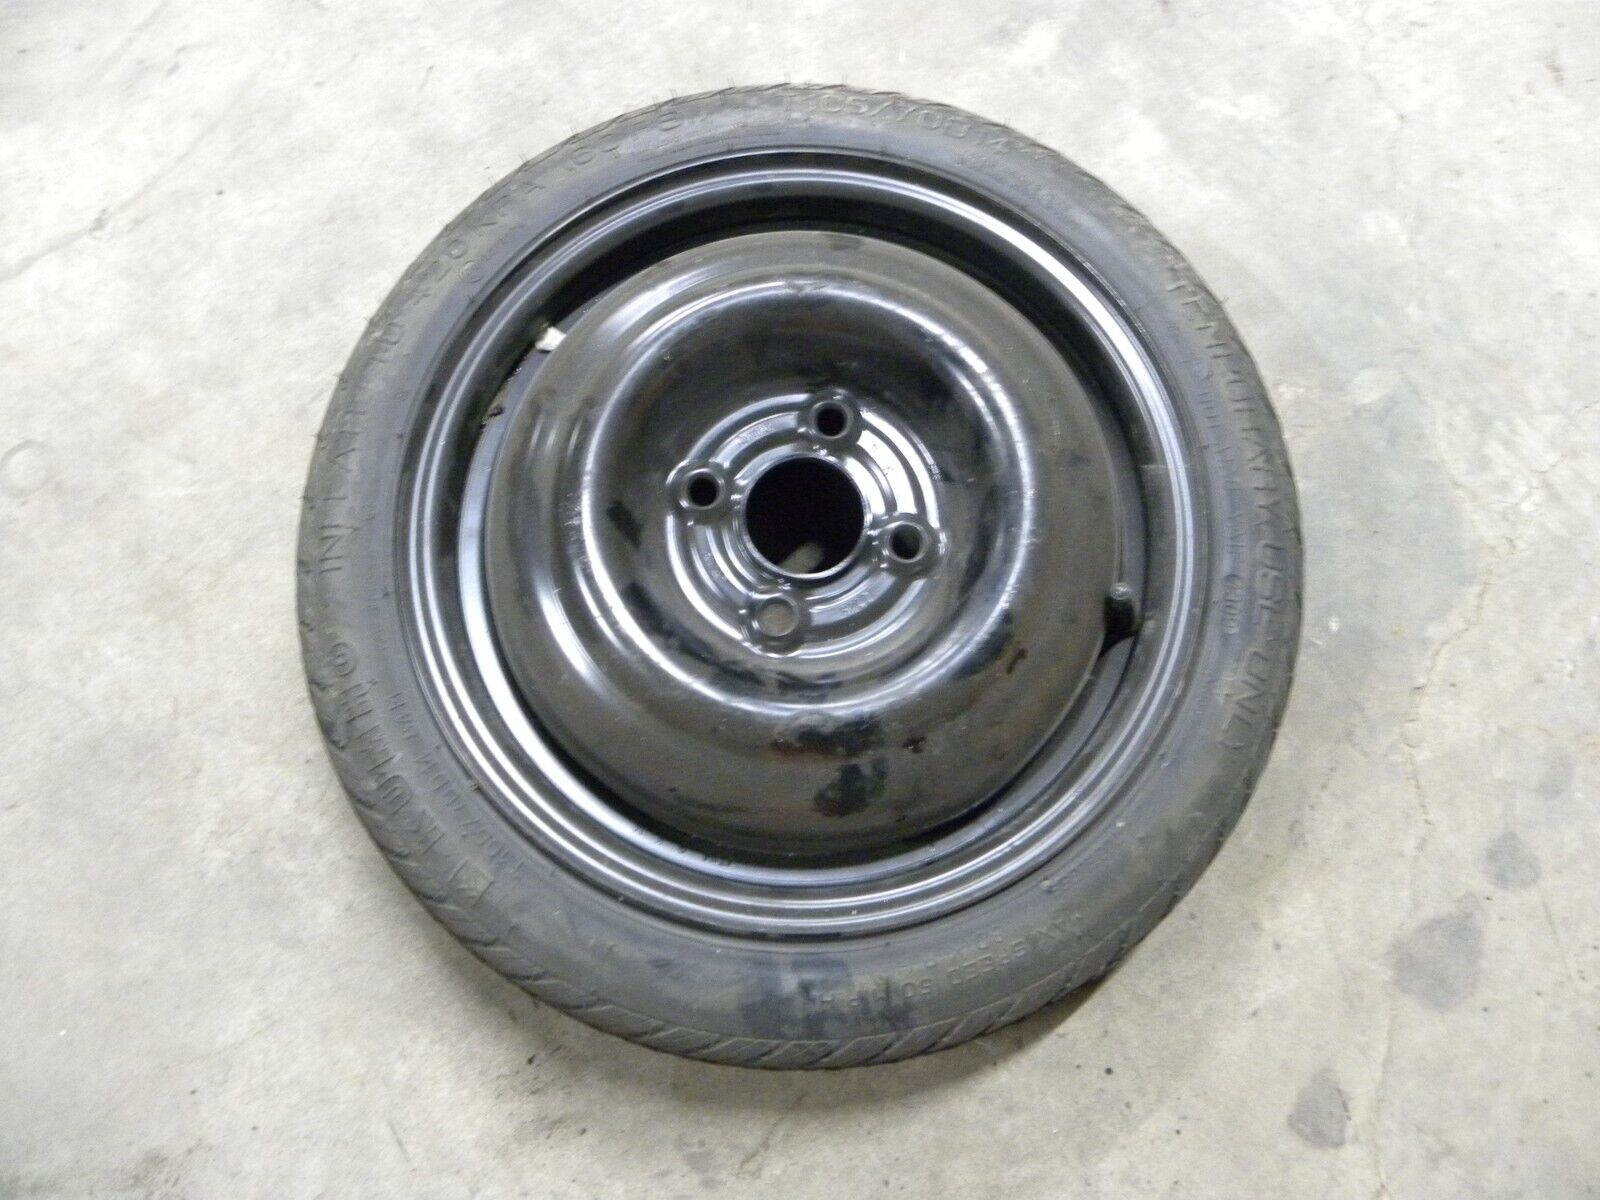 04-11 Chevrolet Aveo Compact Temporary Spare Tire Wheel Rim 14x4, 4 lug, 100mm